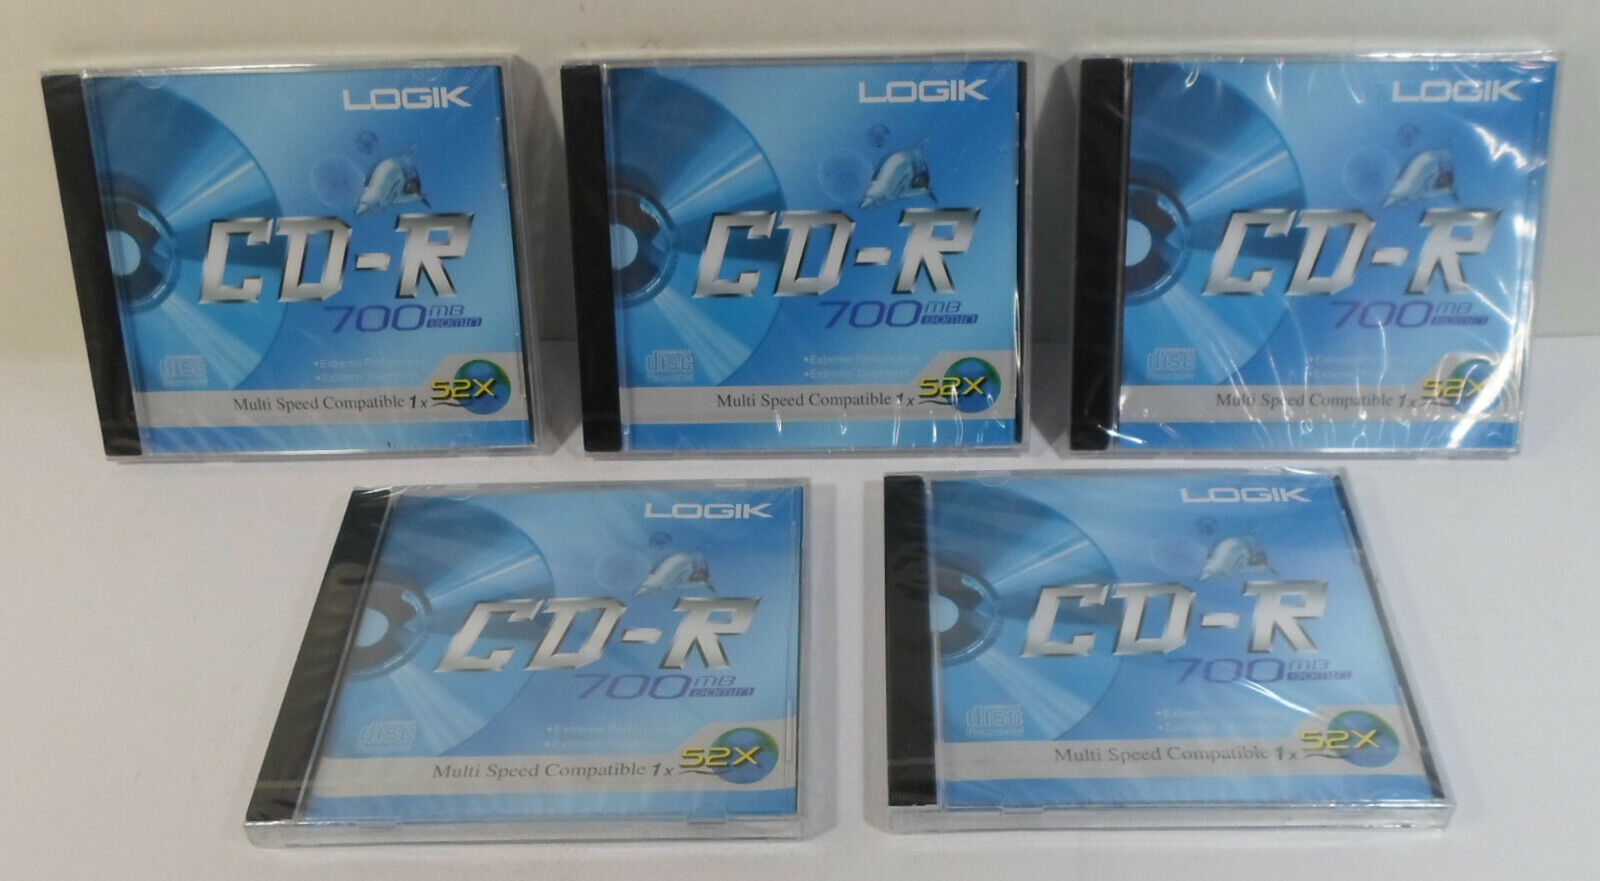 LOGIK LOT OF 5 x CD-R 700MB 52X 80min RECORDABLE BLANK DISCS SEALED SET